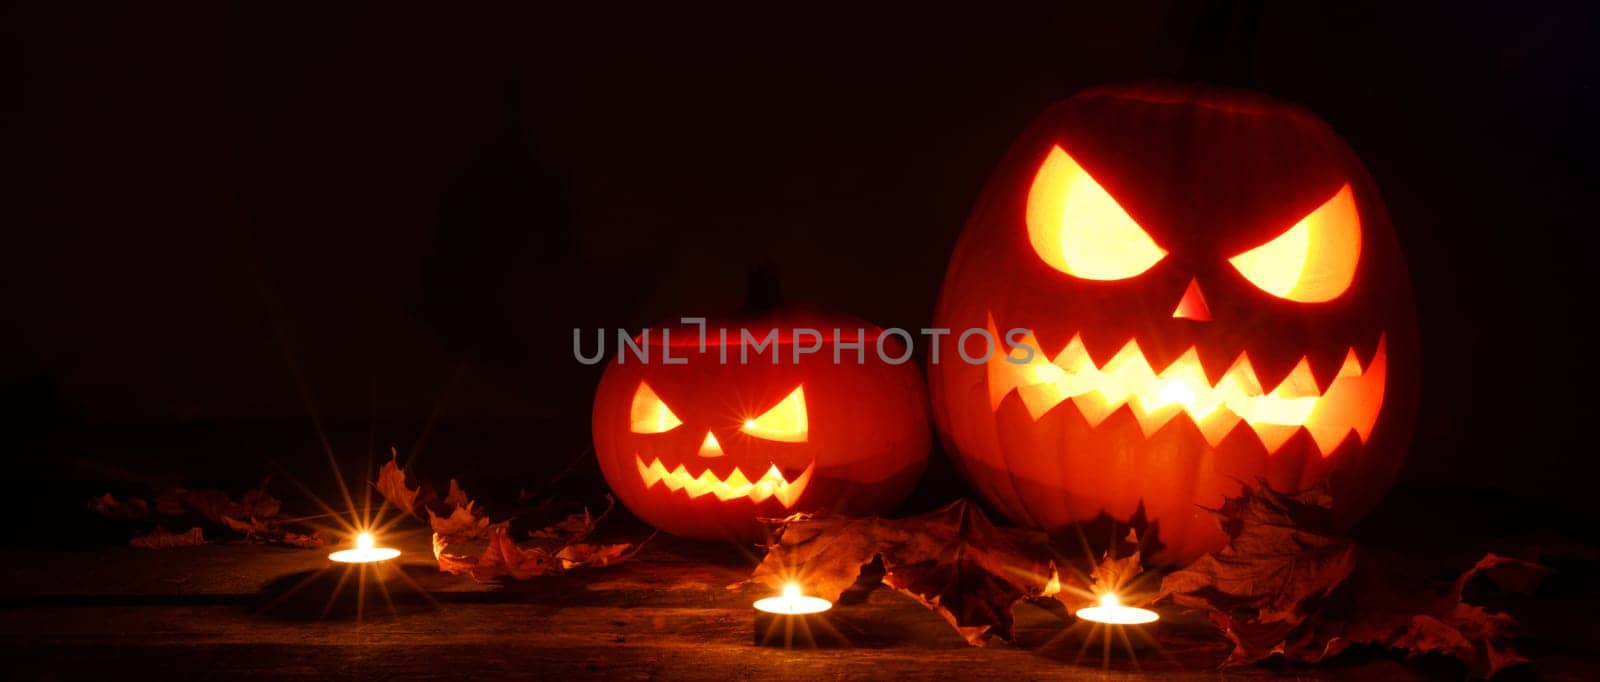 Three glowing Halloween Pumpkin lanterns and burning candles on dark wooden background